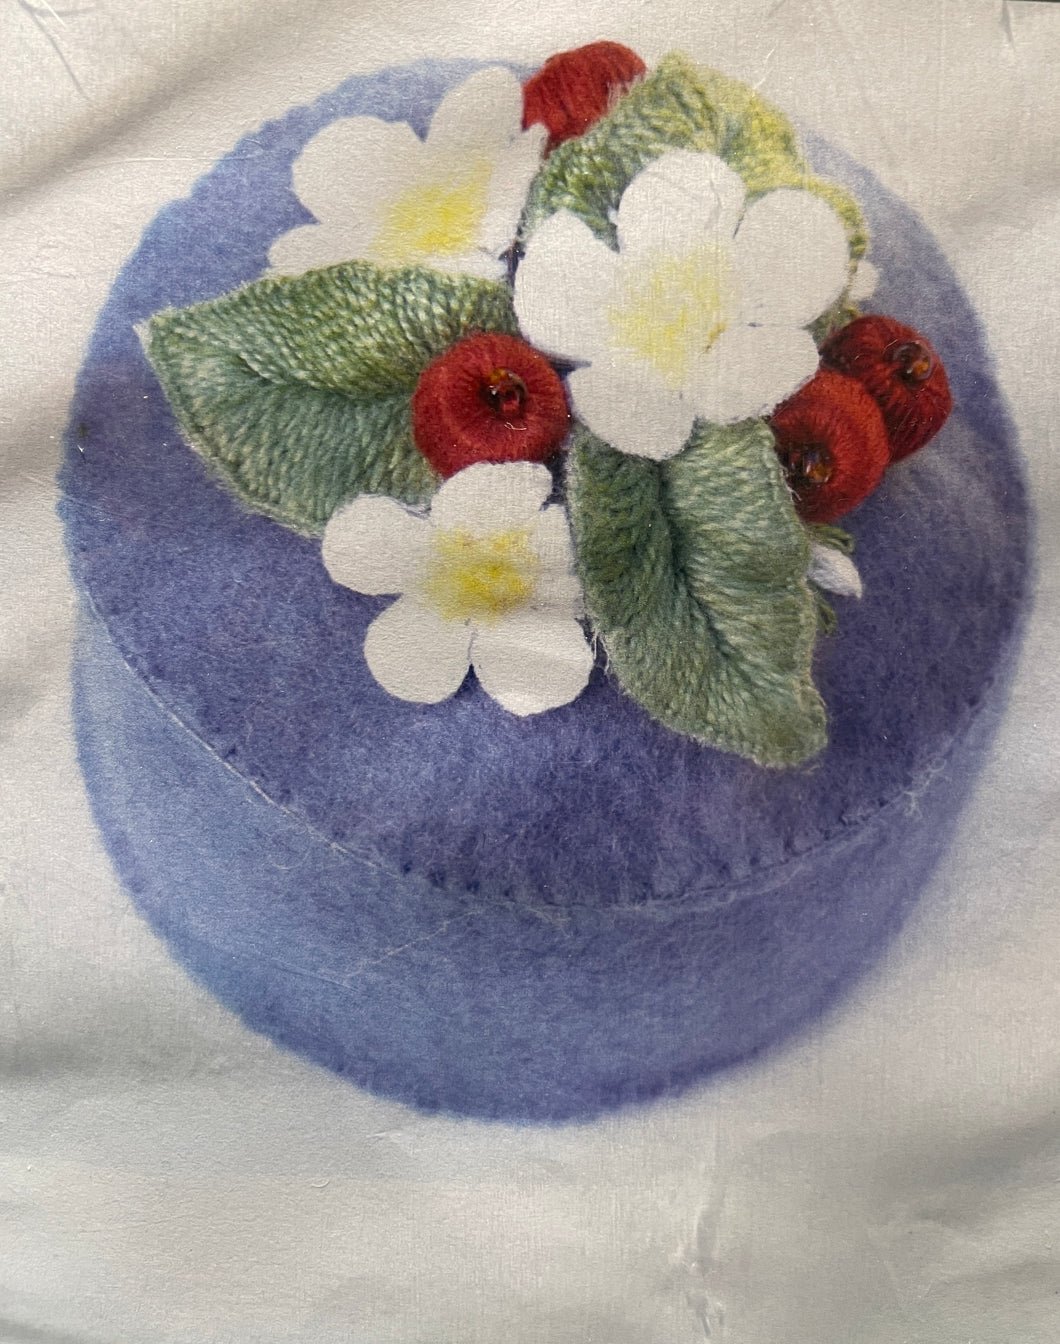 Berry & flowers pincushion